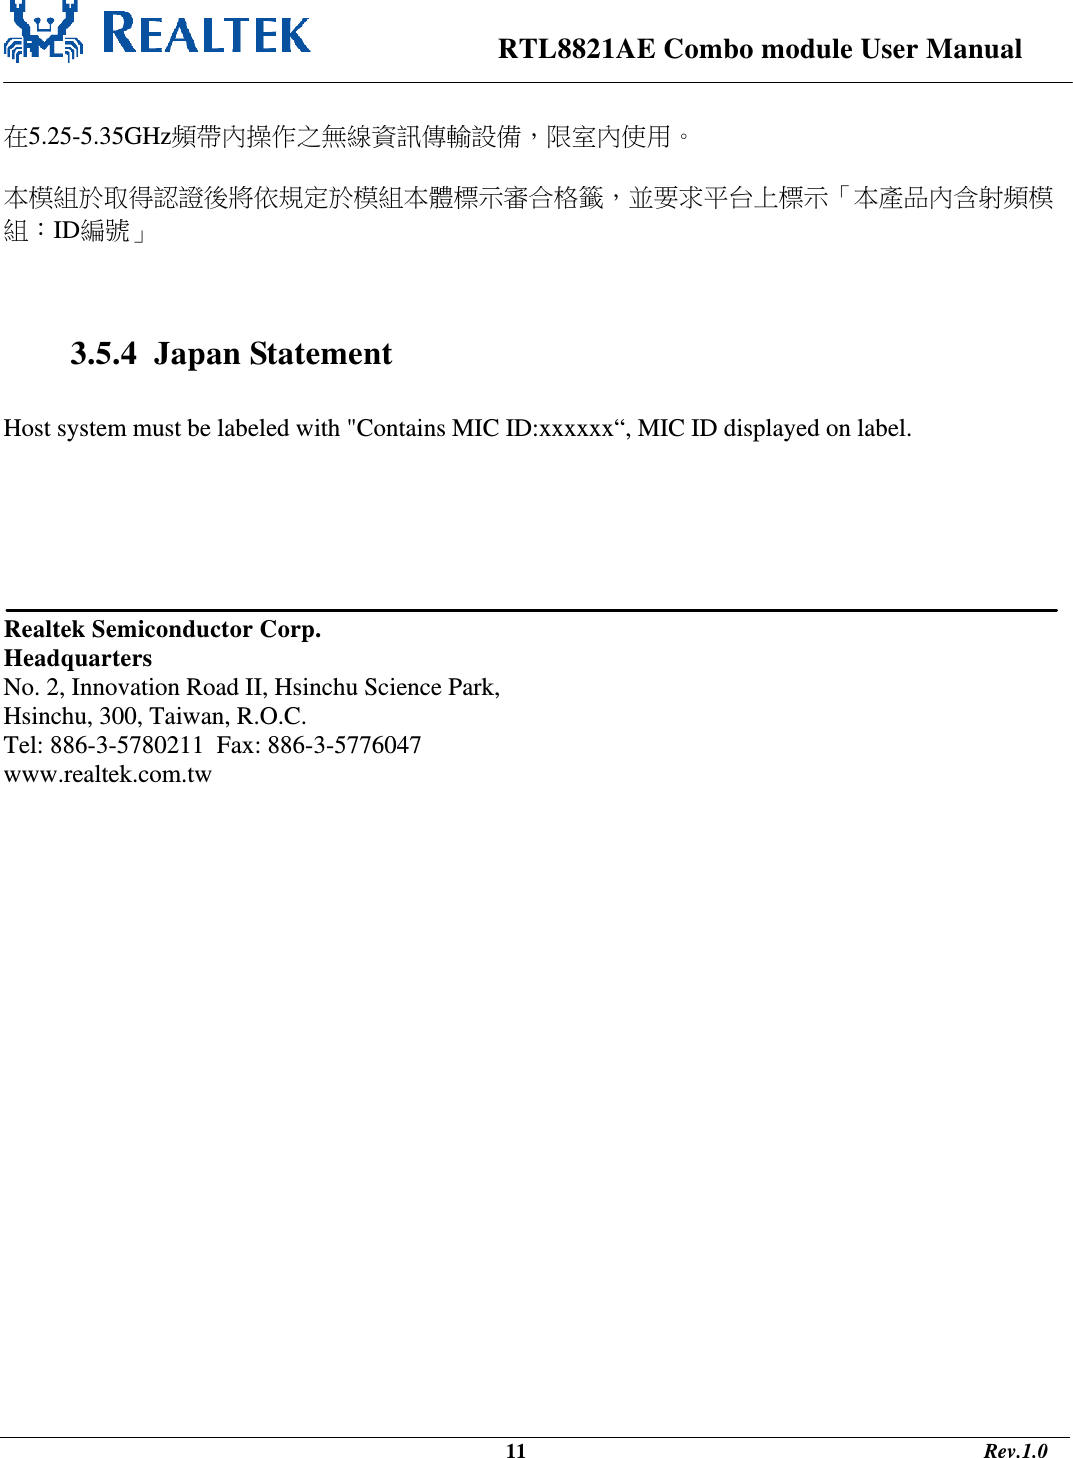                                                                      RTL8821AE Combo module User Manual                                                                                              11                                                                                       Rev.1.0   在5.25-5.35GHz頻帶內操作之無線資訊傳輸設備，限室內使用。  本模組於取得認證後將依規定於模組本體標示審合格籤，並要求平台上標示「本產品內含射頻模組：ID編號」    3.5.4  Japan Statement  Host system must be labeled with &quot;Contains MIC ID:xxxxxx“, MIC ID displayed on label.        Realtek Semiconductor Corp. Headquarters No. 2, Innovation Road II, Hsinchu Science Park, Hsinchu, 300, Taiwan, R.O.C. Tel: 886-3-5780211  Fax: 886-3-5776047 www.realtek.com.tw  